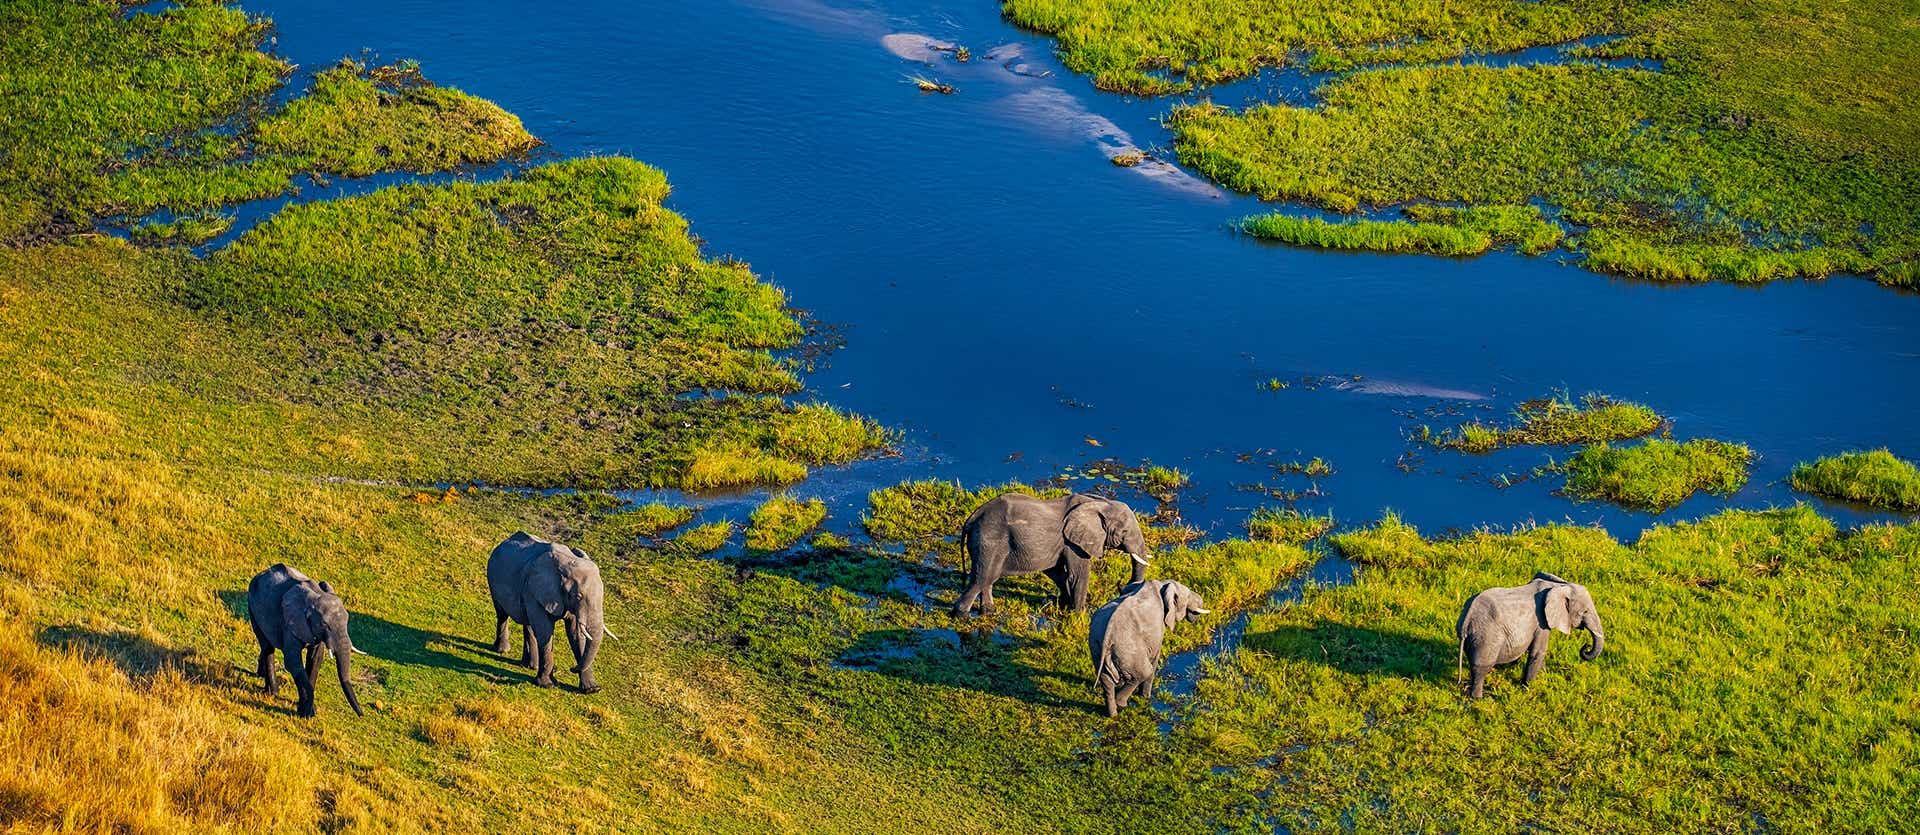 Okavango Delta <span class="iconos separador"></span> Botswana